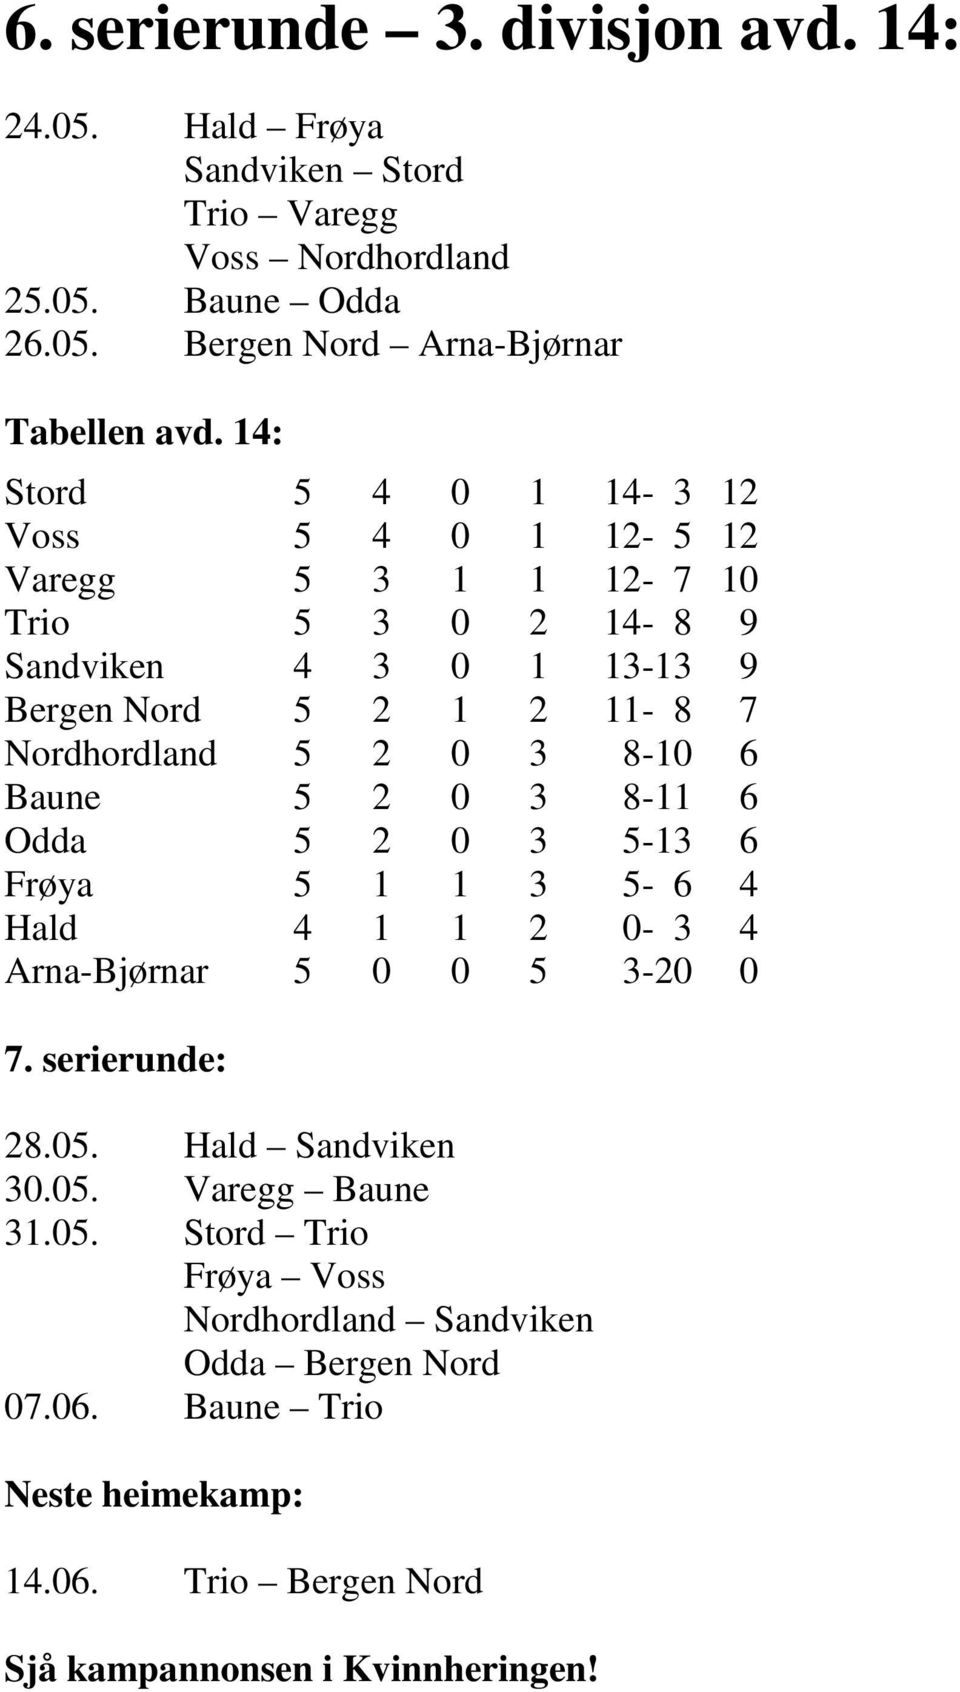 8-10 6 Baune 5 2 0 3 8-11 6 Odda 5 2 0 3 5-13 6 Frøya 5 1 1 3 5-6 4 Hald 4 1 1 2 0-3 4 Arna-Bjørnar 5 0 0 5 3-20 0 7. serierunde: 28.05. Hald Sandviken 30.05. Varegg Baune 31.